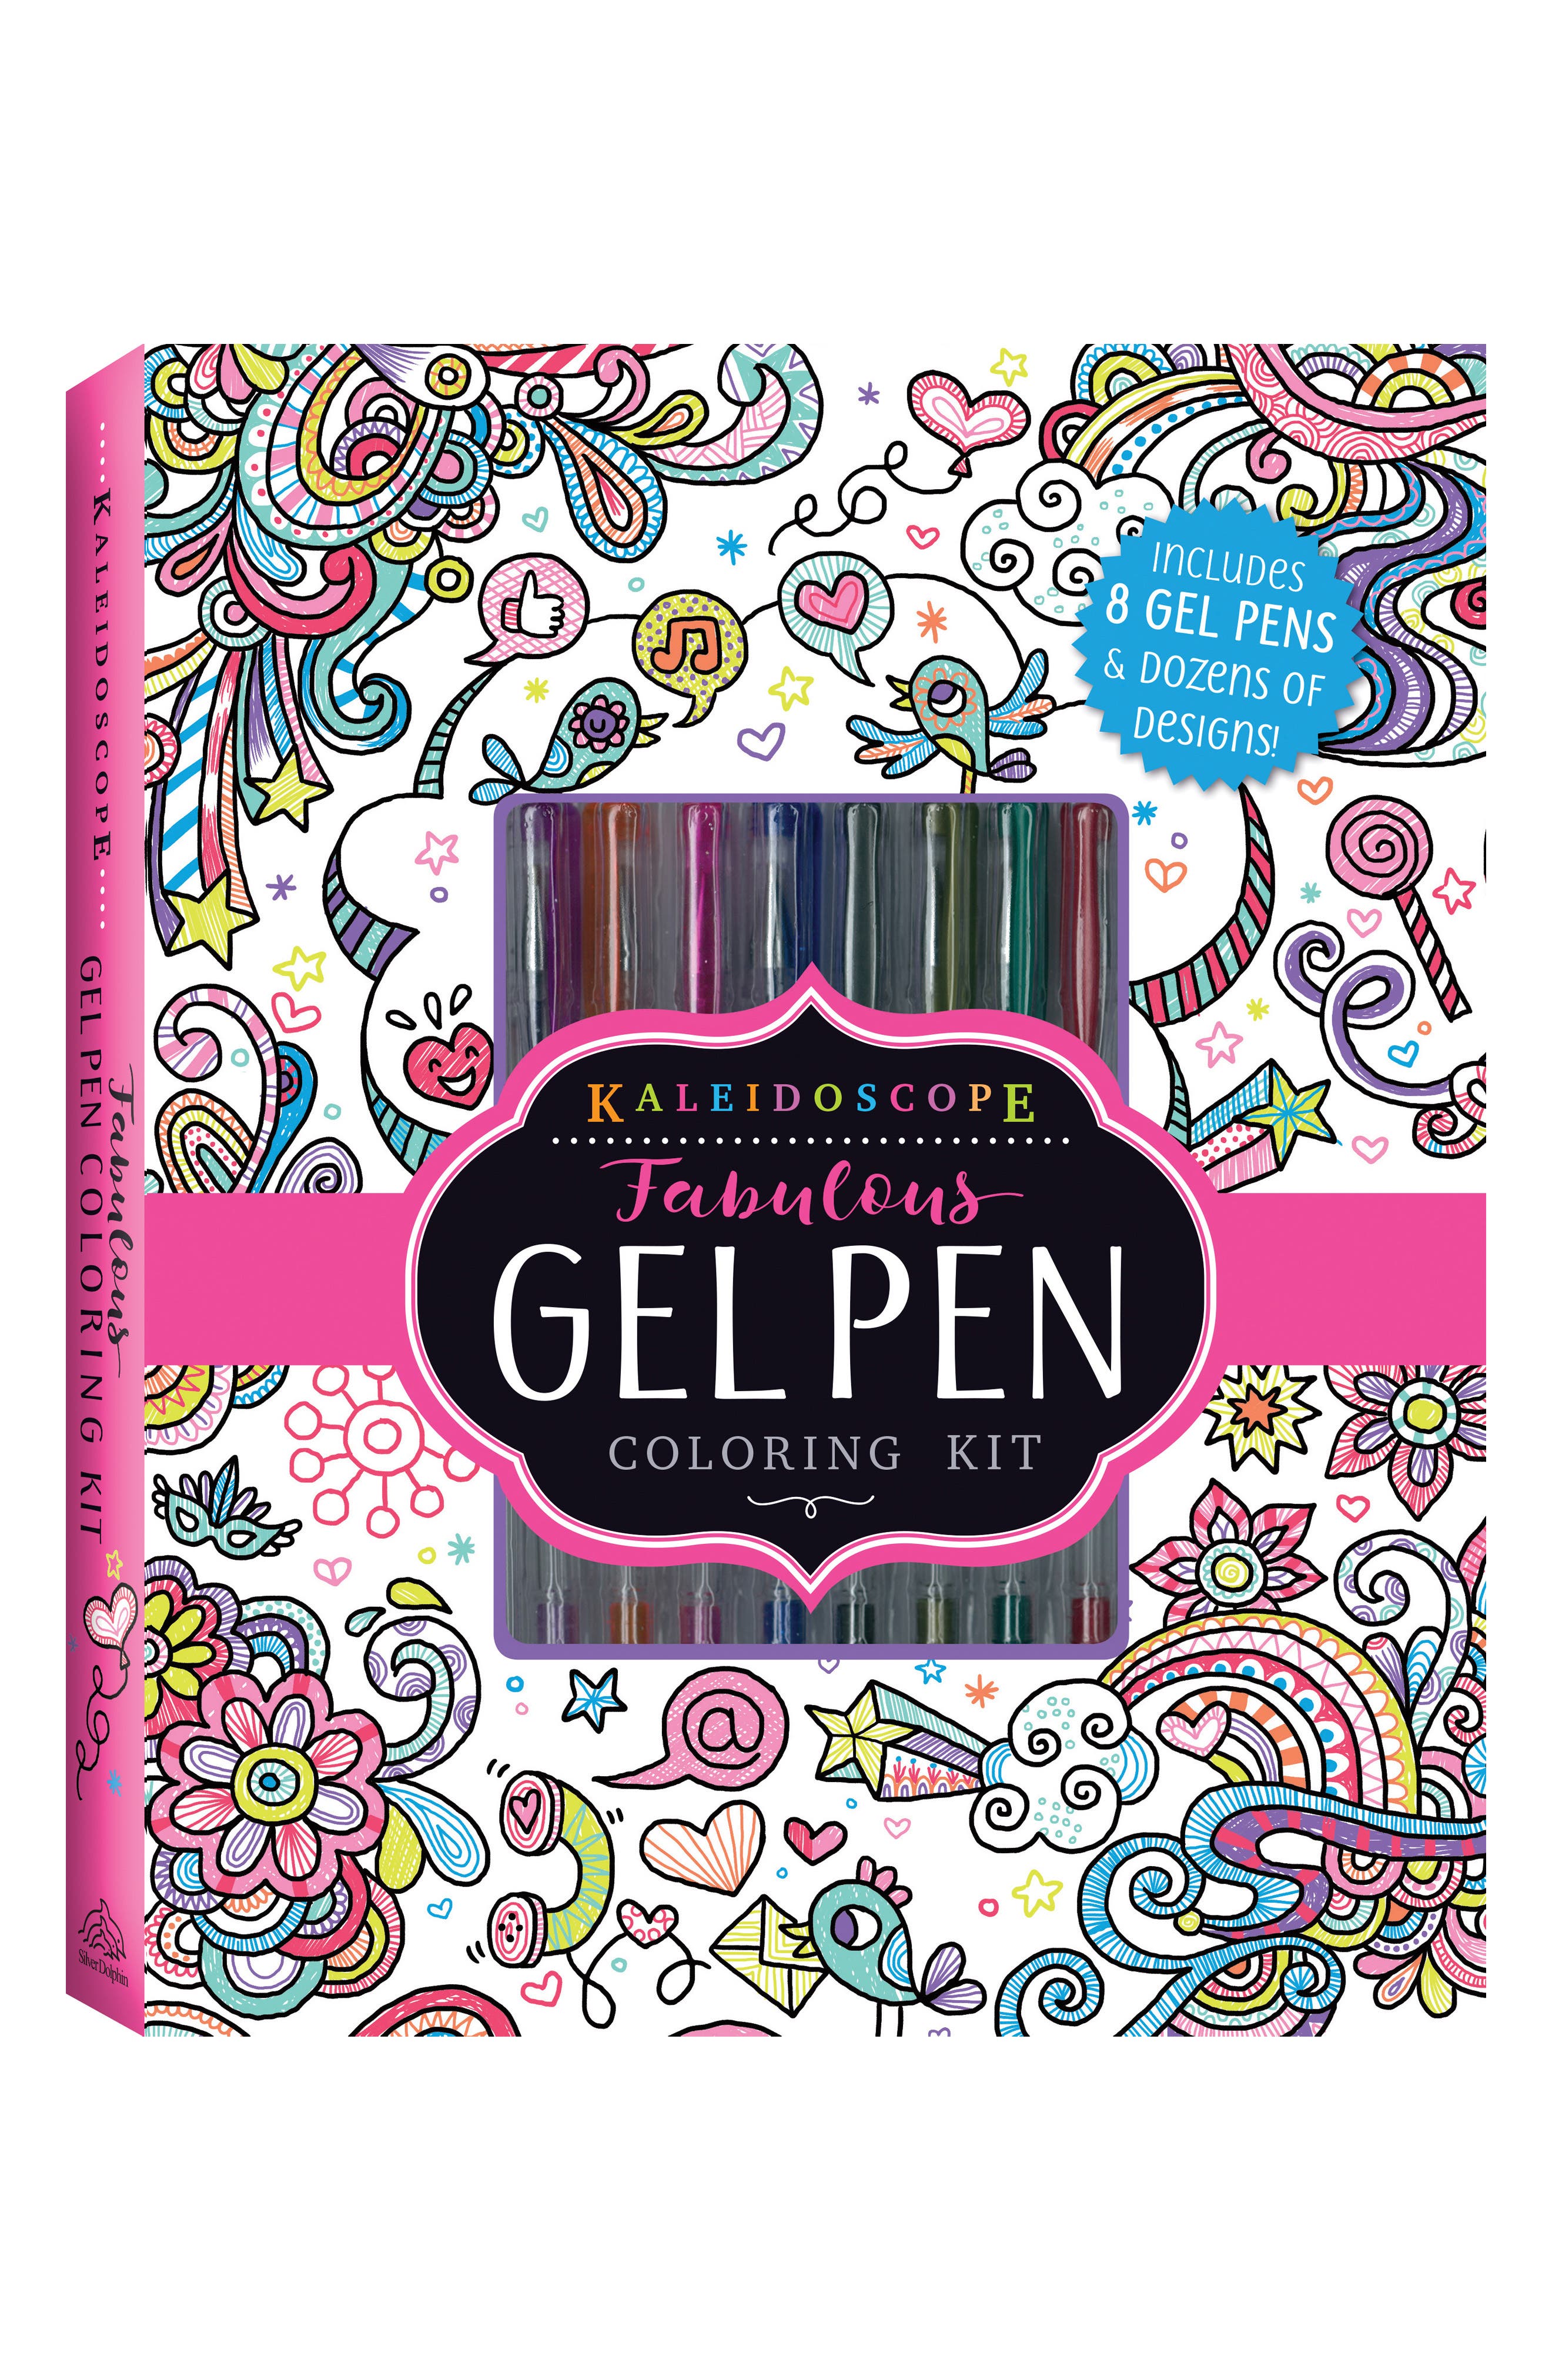 ISBN 9781684123070 product image for 'Kaleidoscope: Fabulous Gel Pen' Coloring Kit | upcitemdb.com